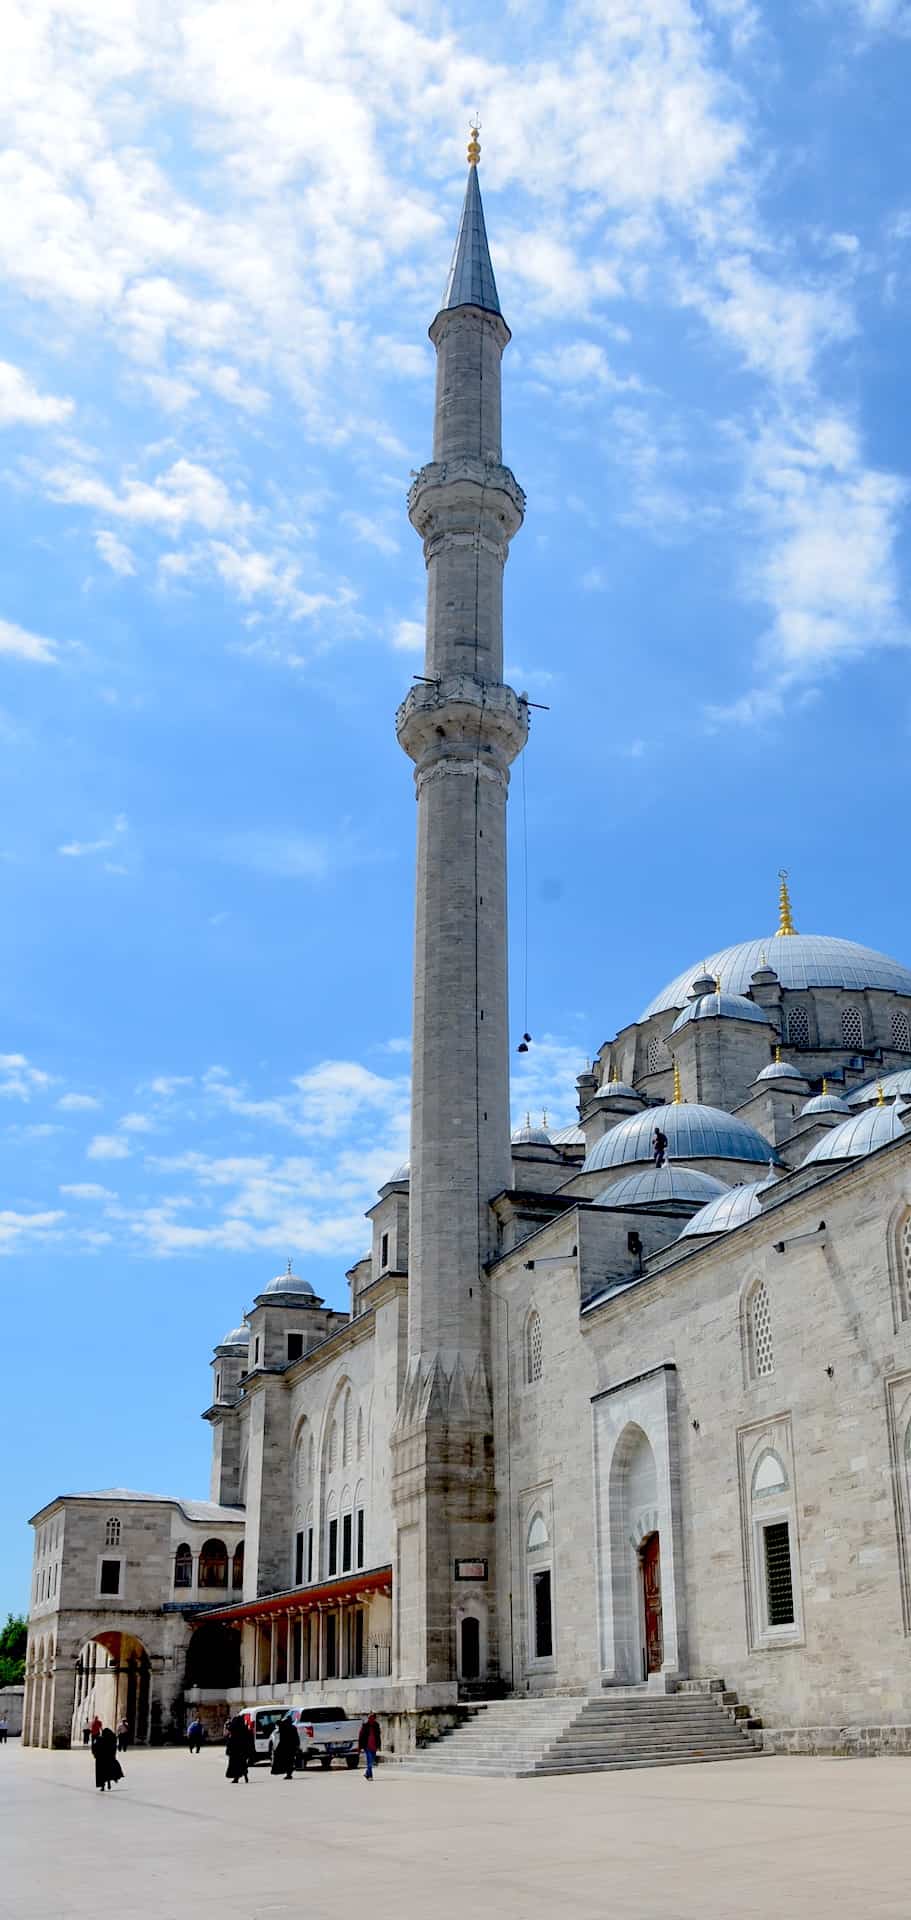 Minaret at the Fatih Mosque